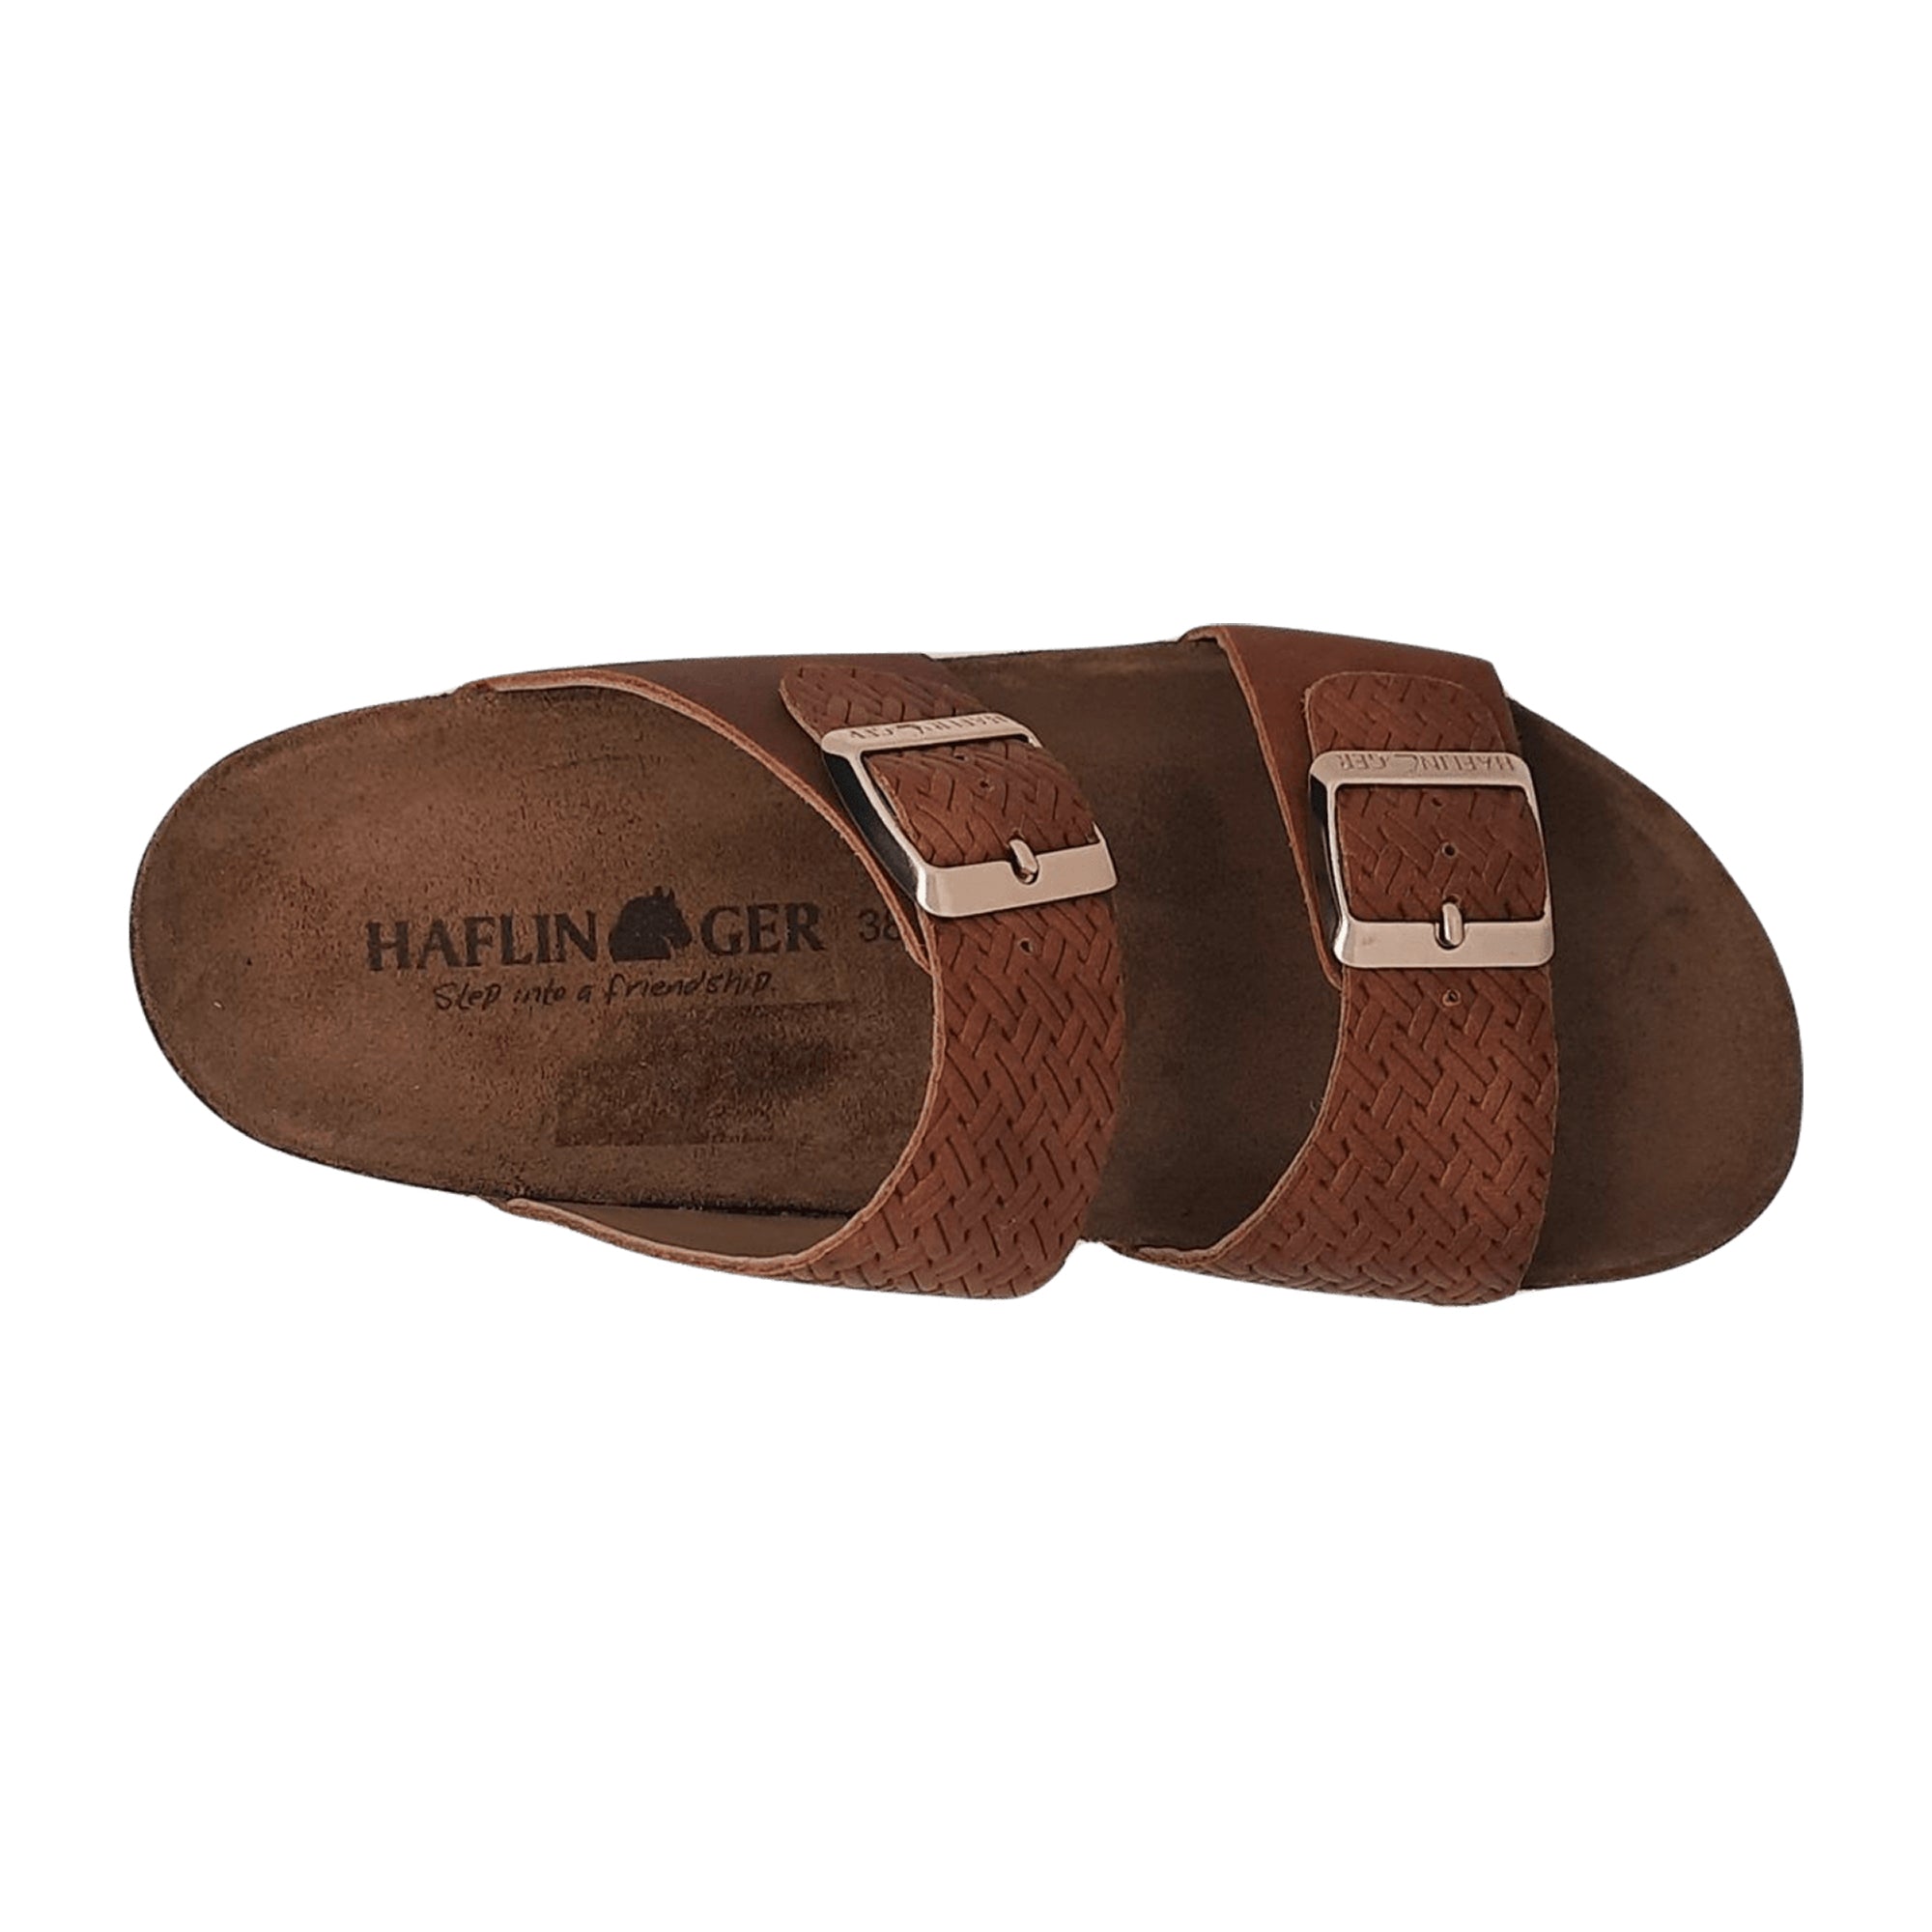 Haflinger Bio Andrea Women's Sandals - Caramel Braided, Brown, EU 37